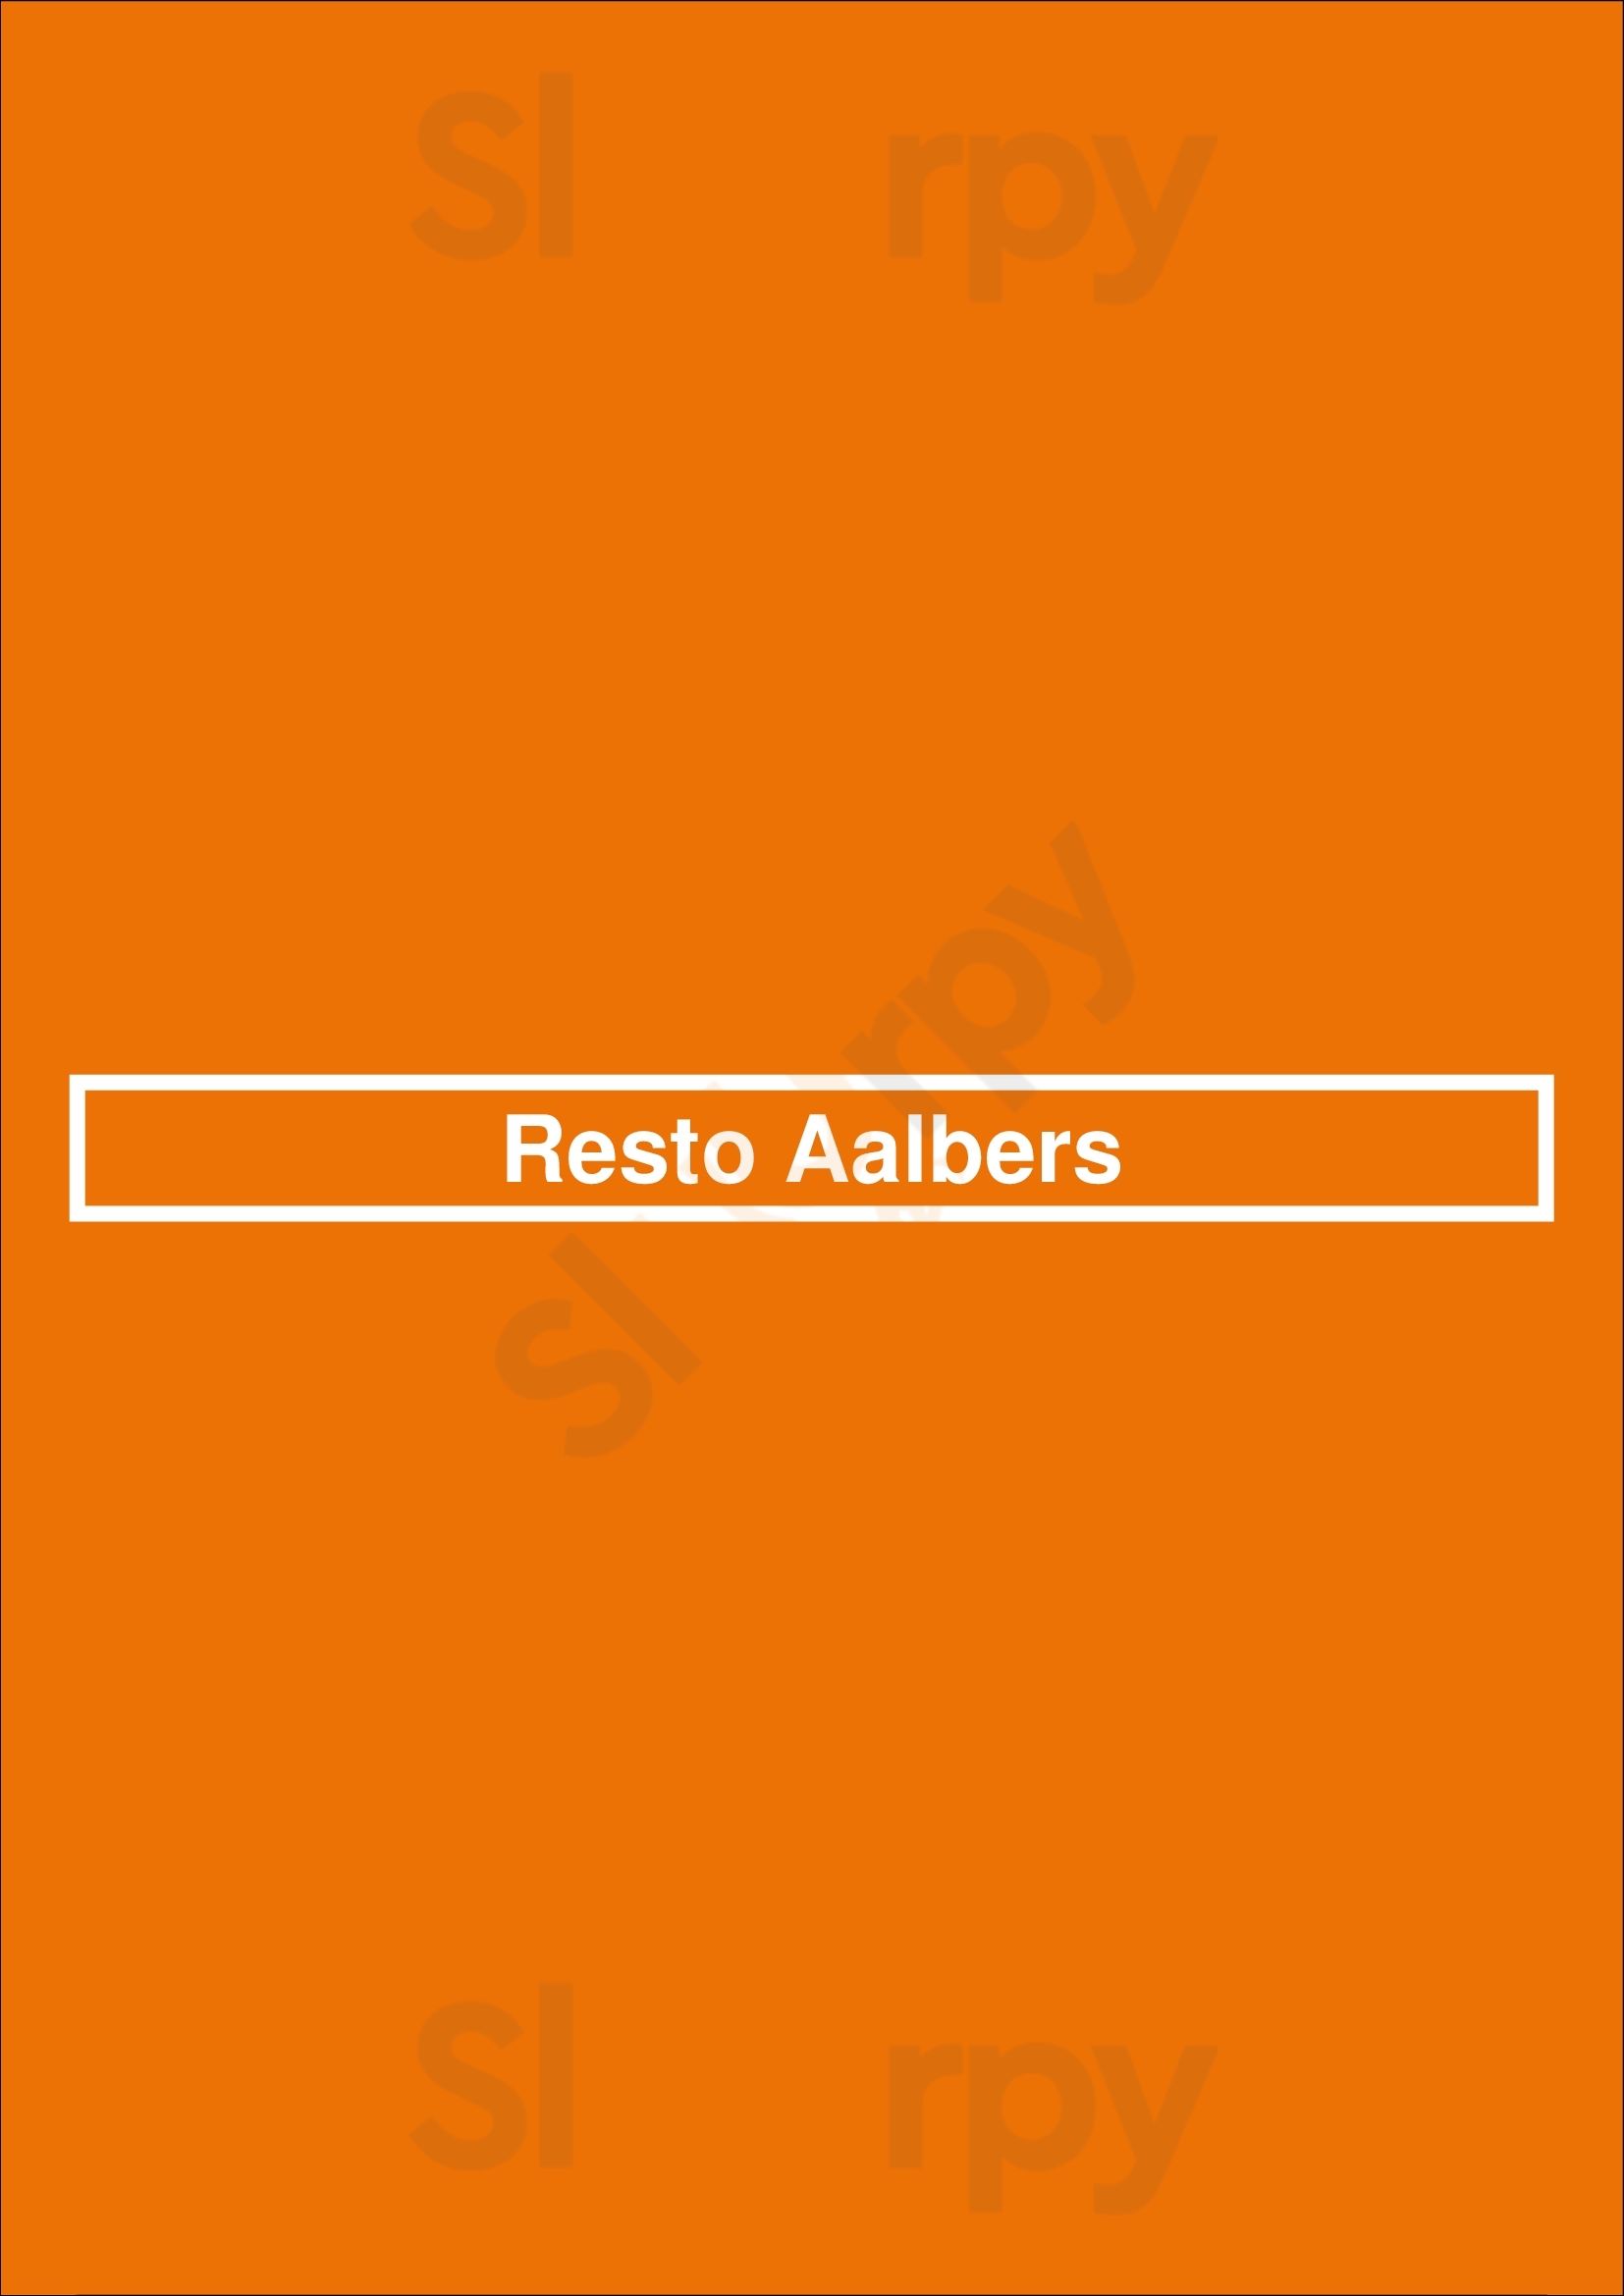 Resto Aalbers Babberich Menu - 1